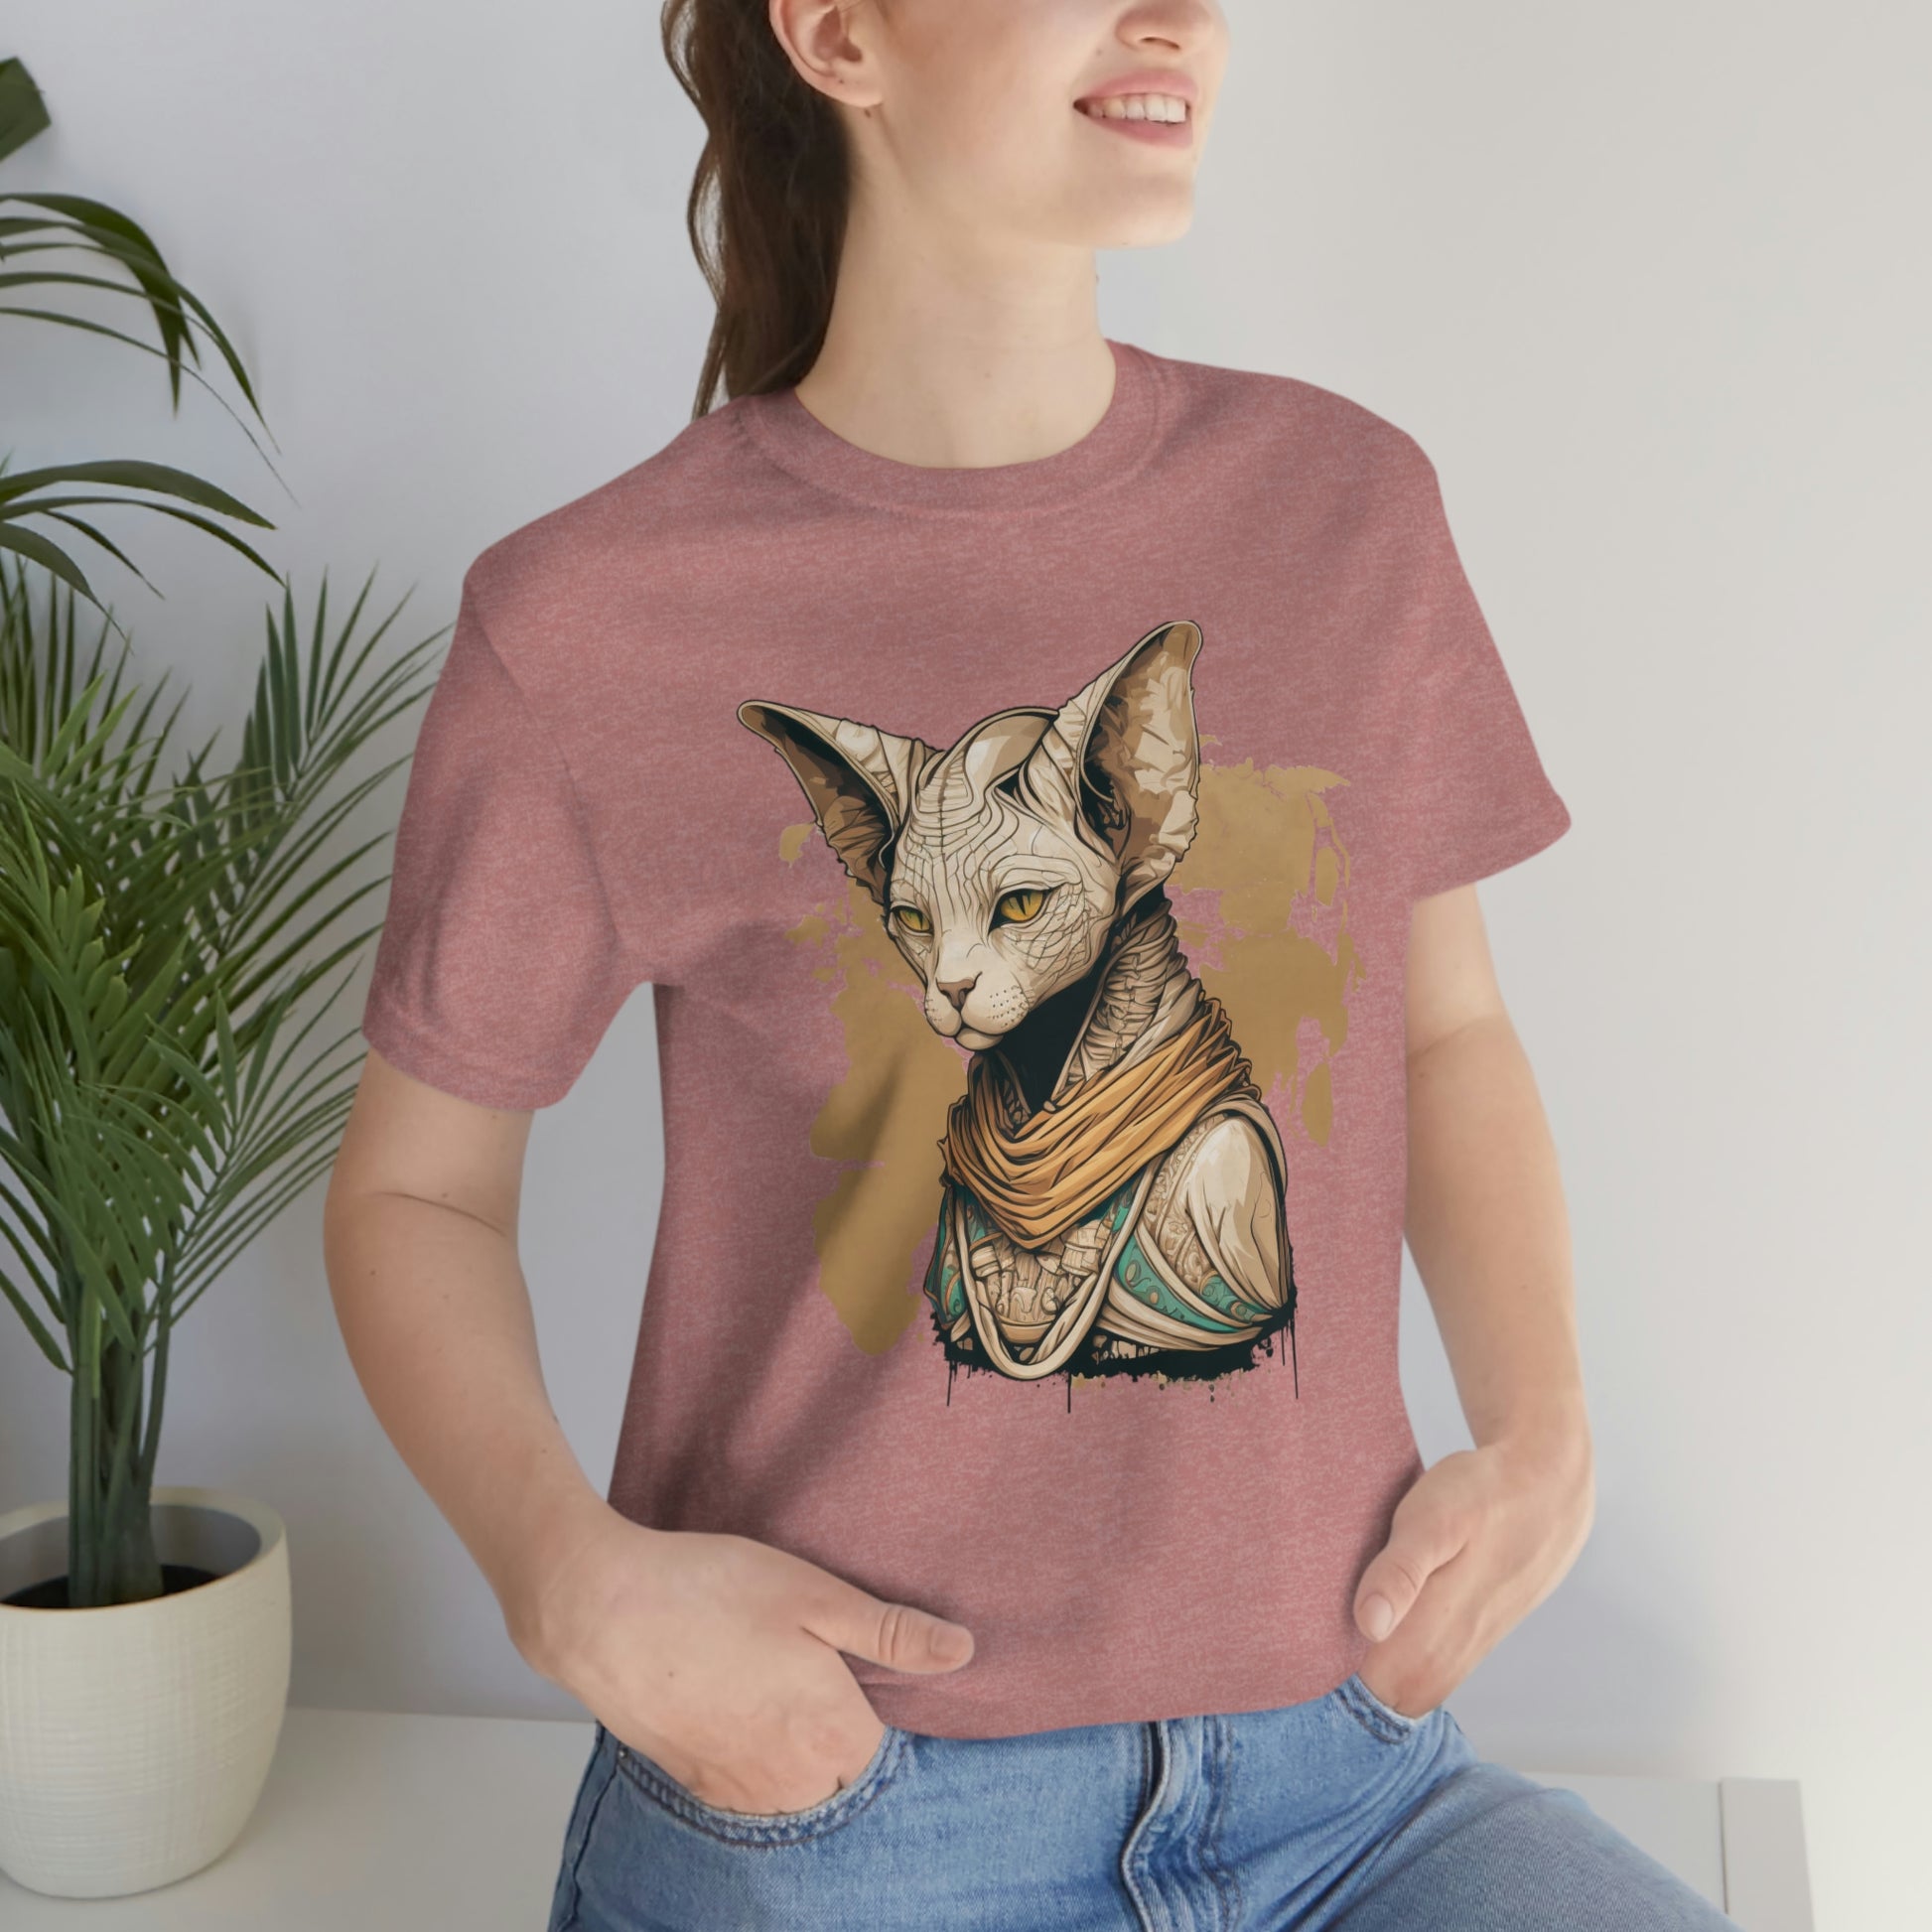 Sphynx cat Tee, cat ancient egypt T-shirt, Sphynx cat pyramid egypt tshirt, pharaoh cat t shirt, Sphynx cat Mom shirt, Sphynx cat owner gift